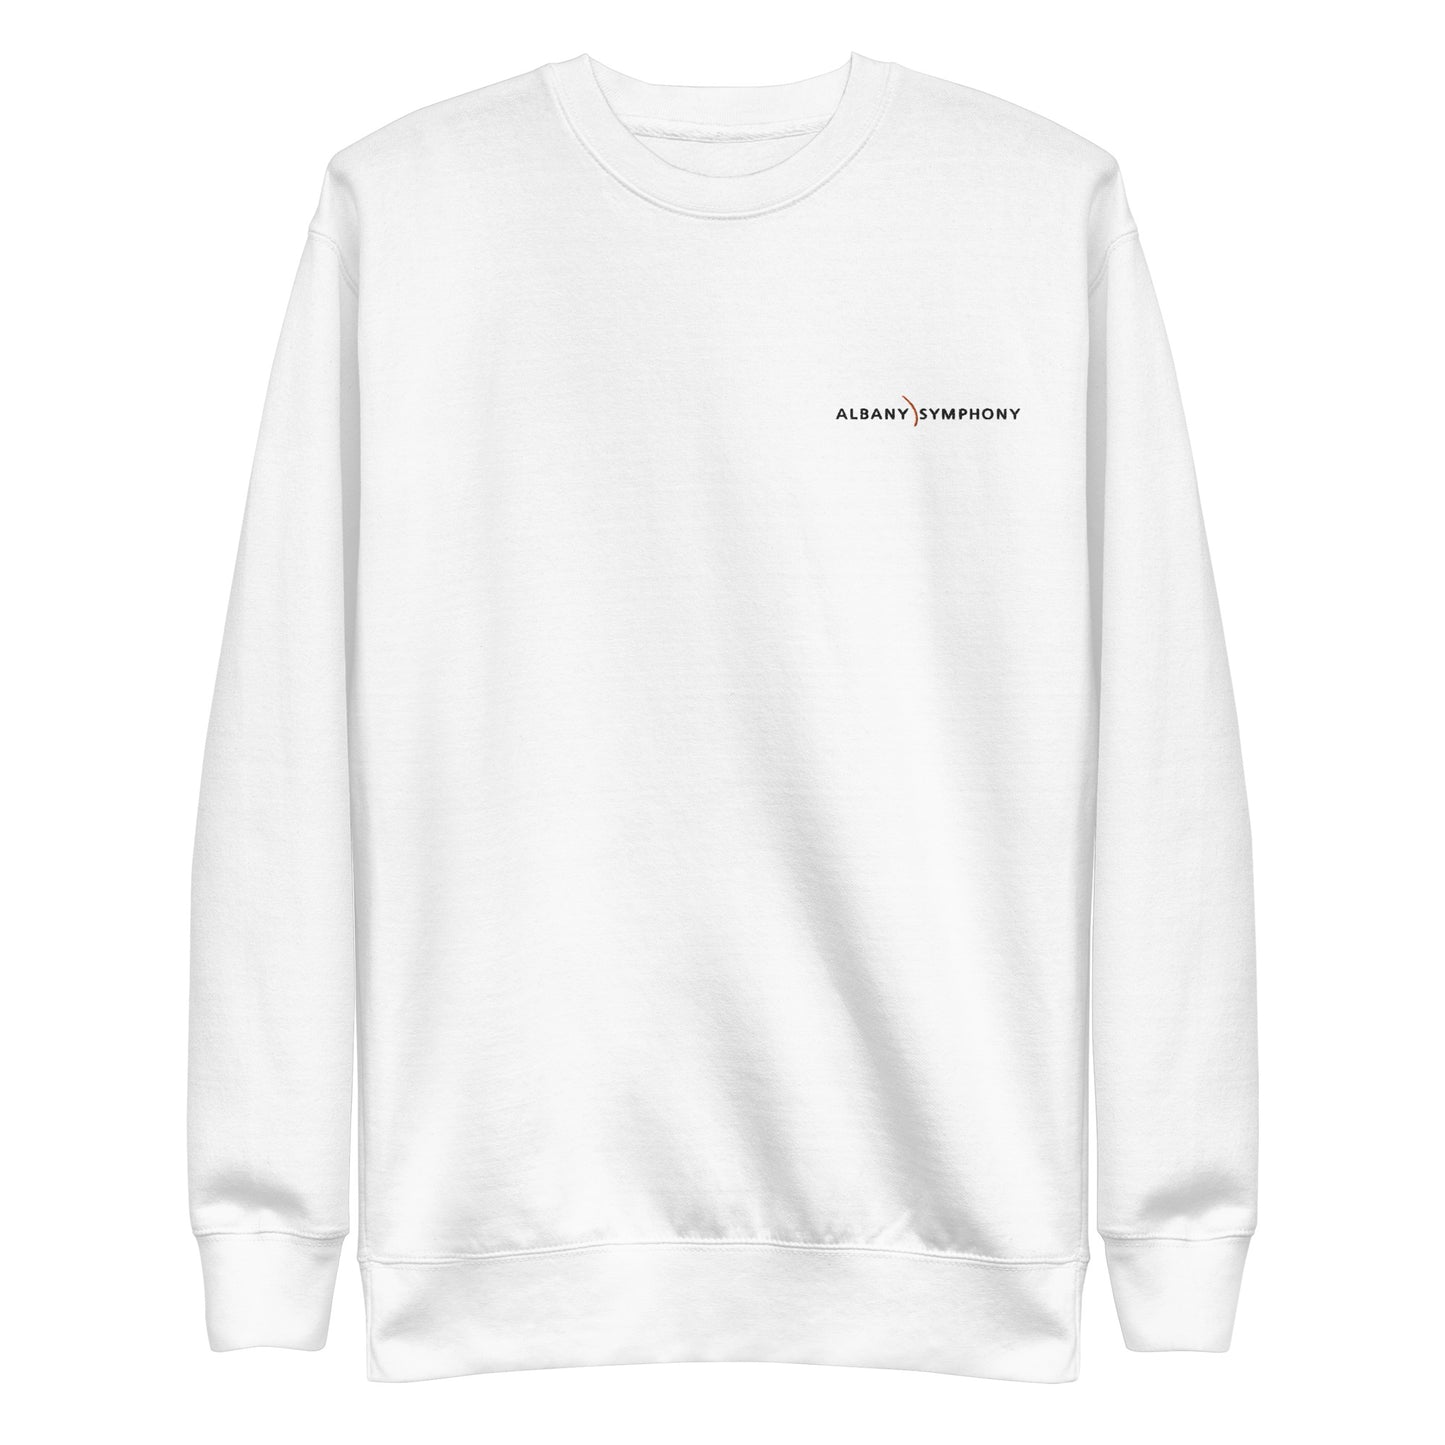 Premium Sweatshirt with black logo